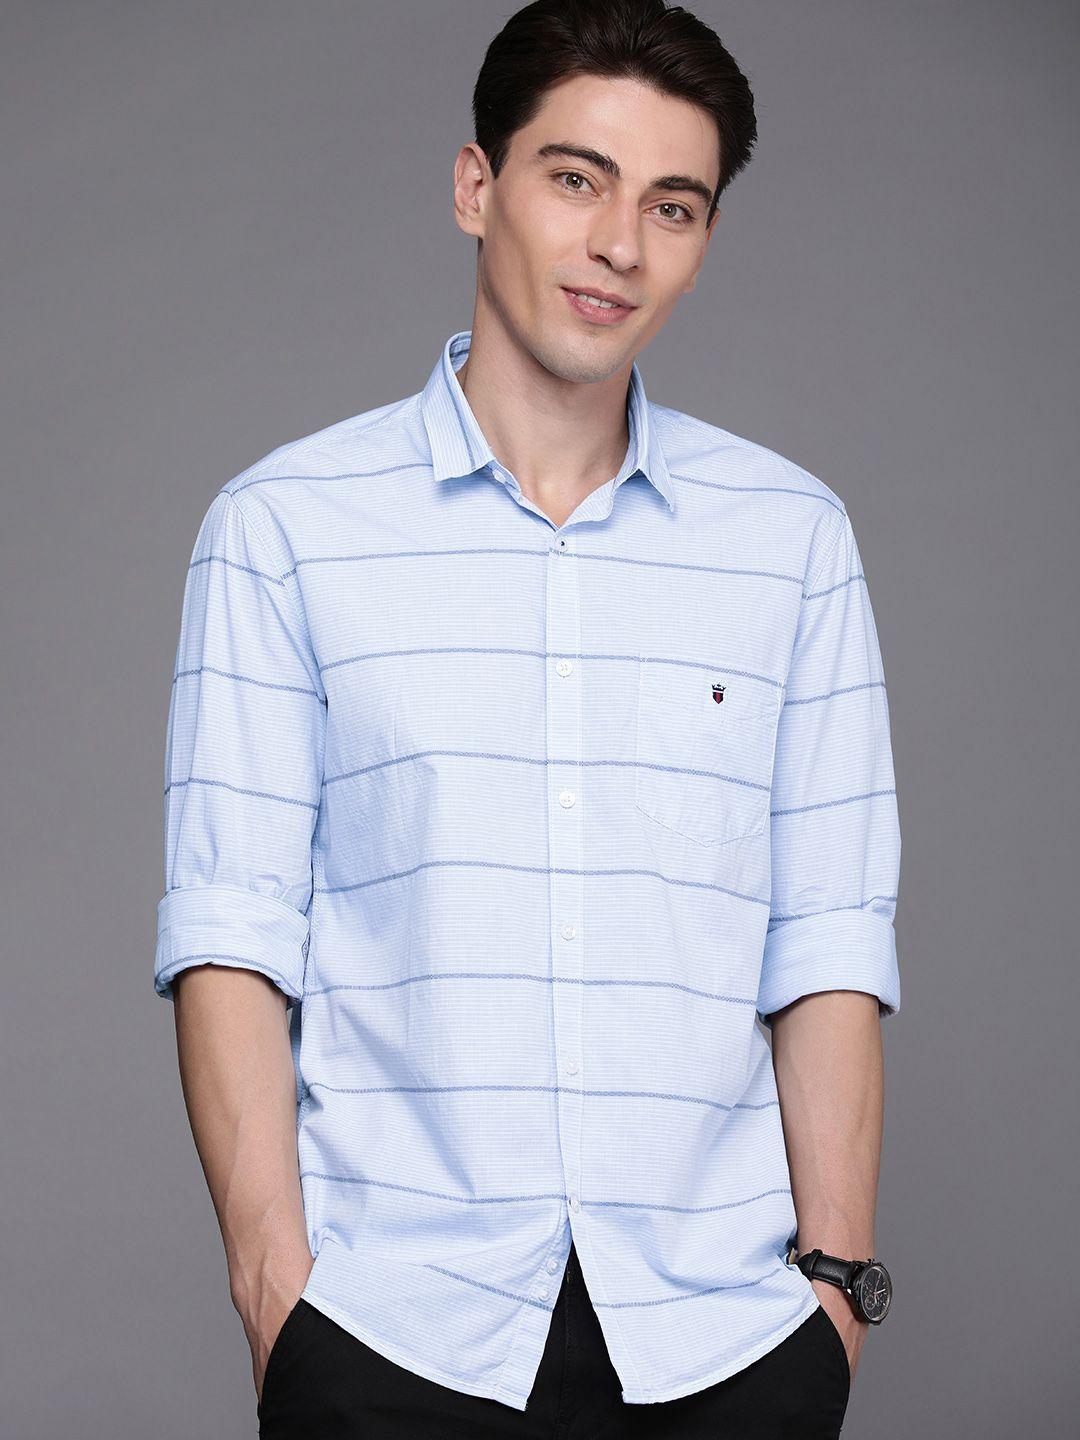 louis philippe sport men slim fit striped pure cotton casual shirt